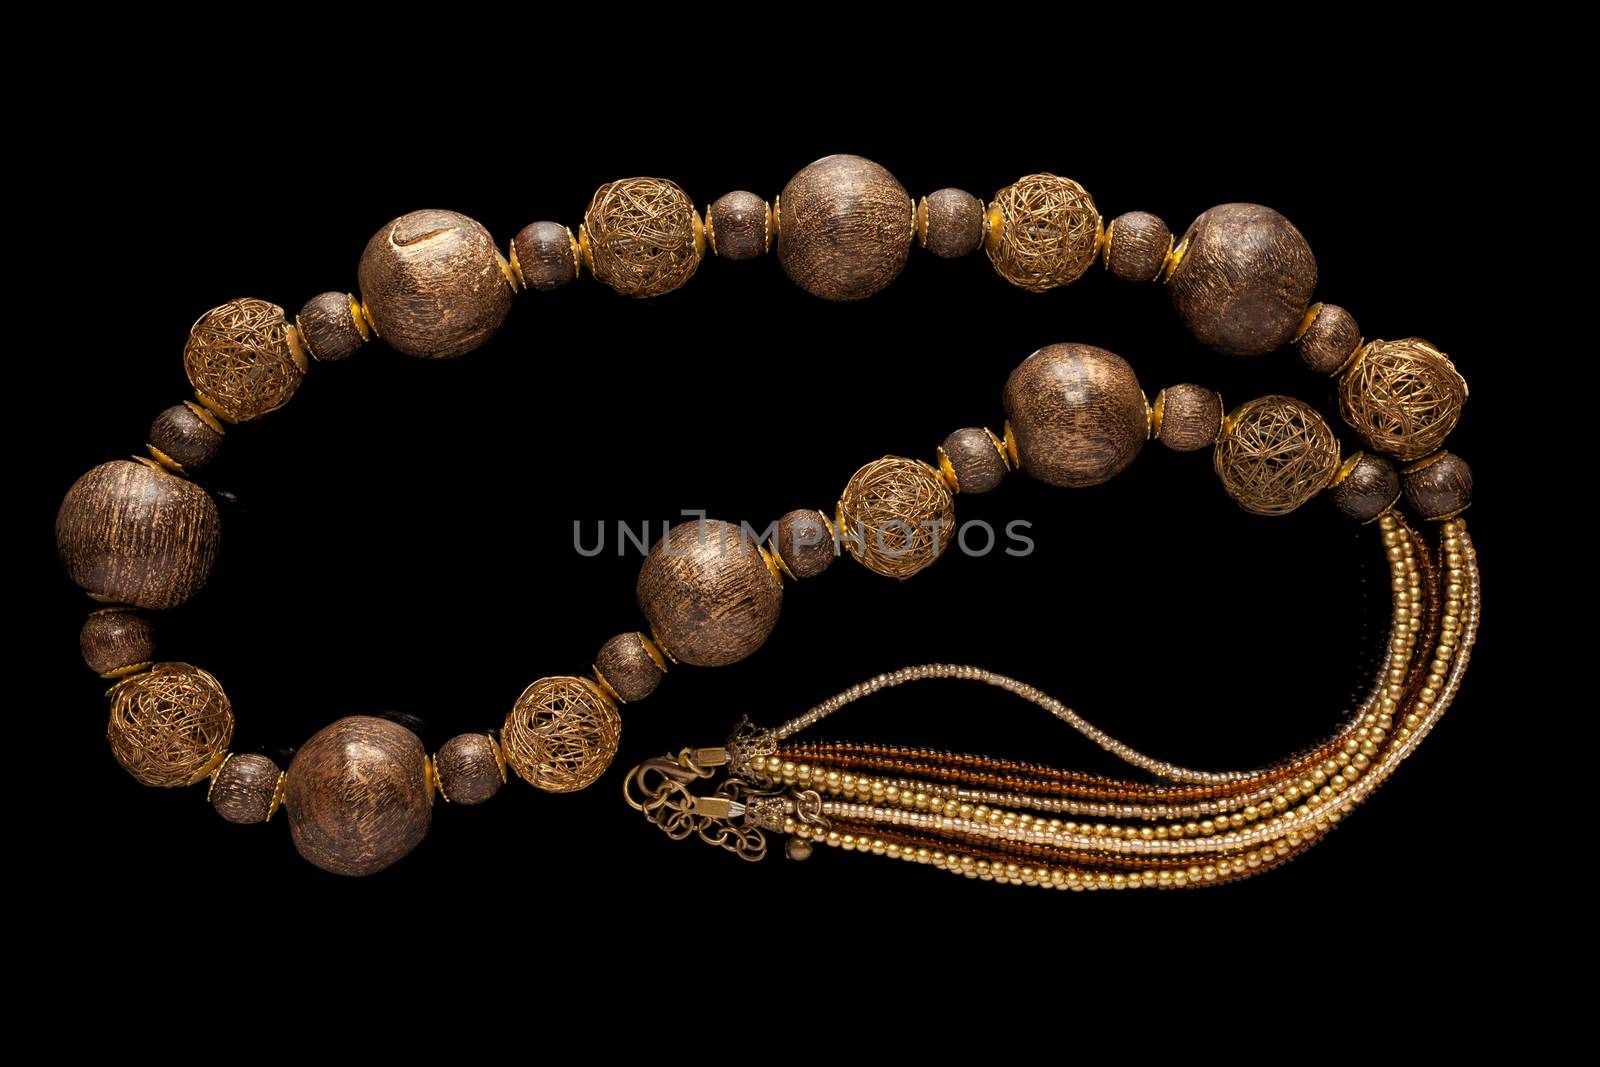 Jewelry of beads by Portokalis